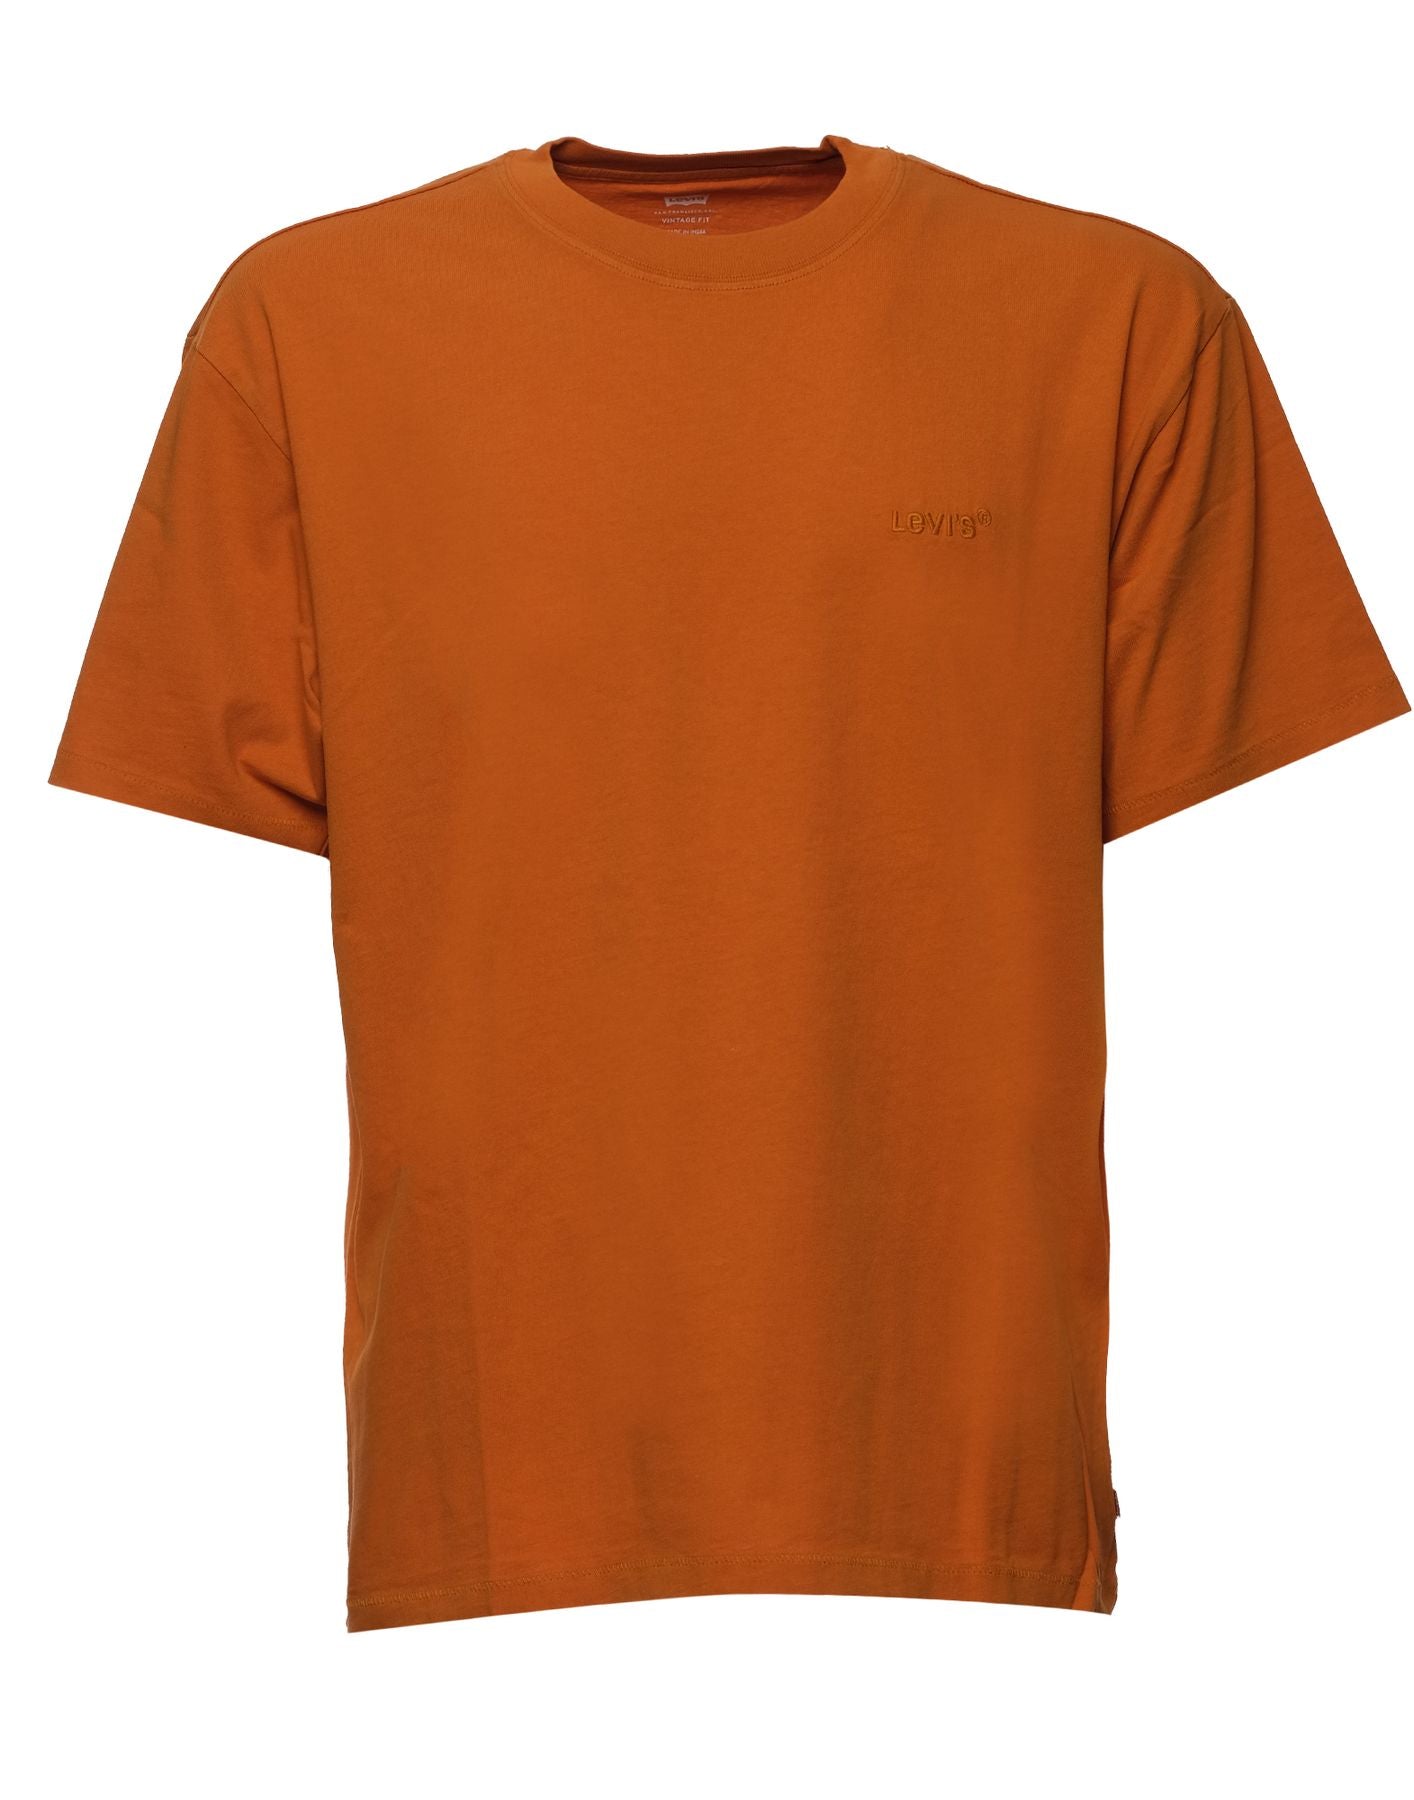 Camiseta Man A0637 0070 Desert Sun Levi's